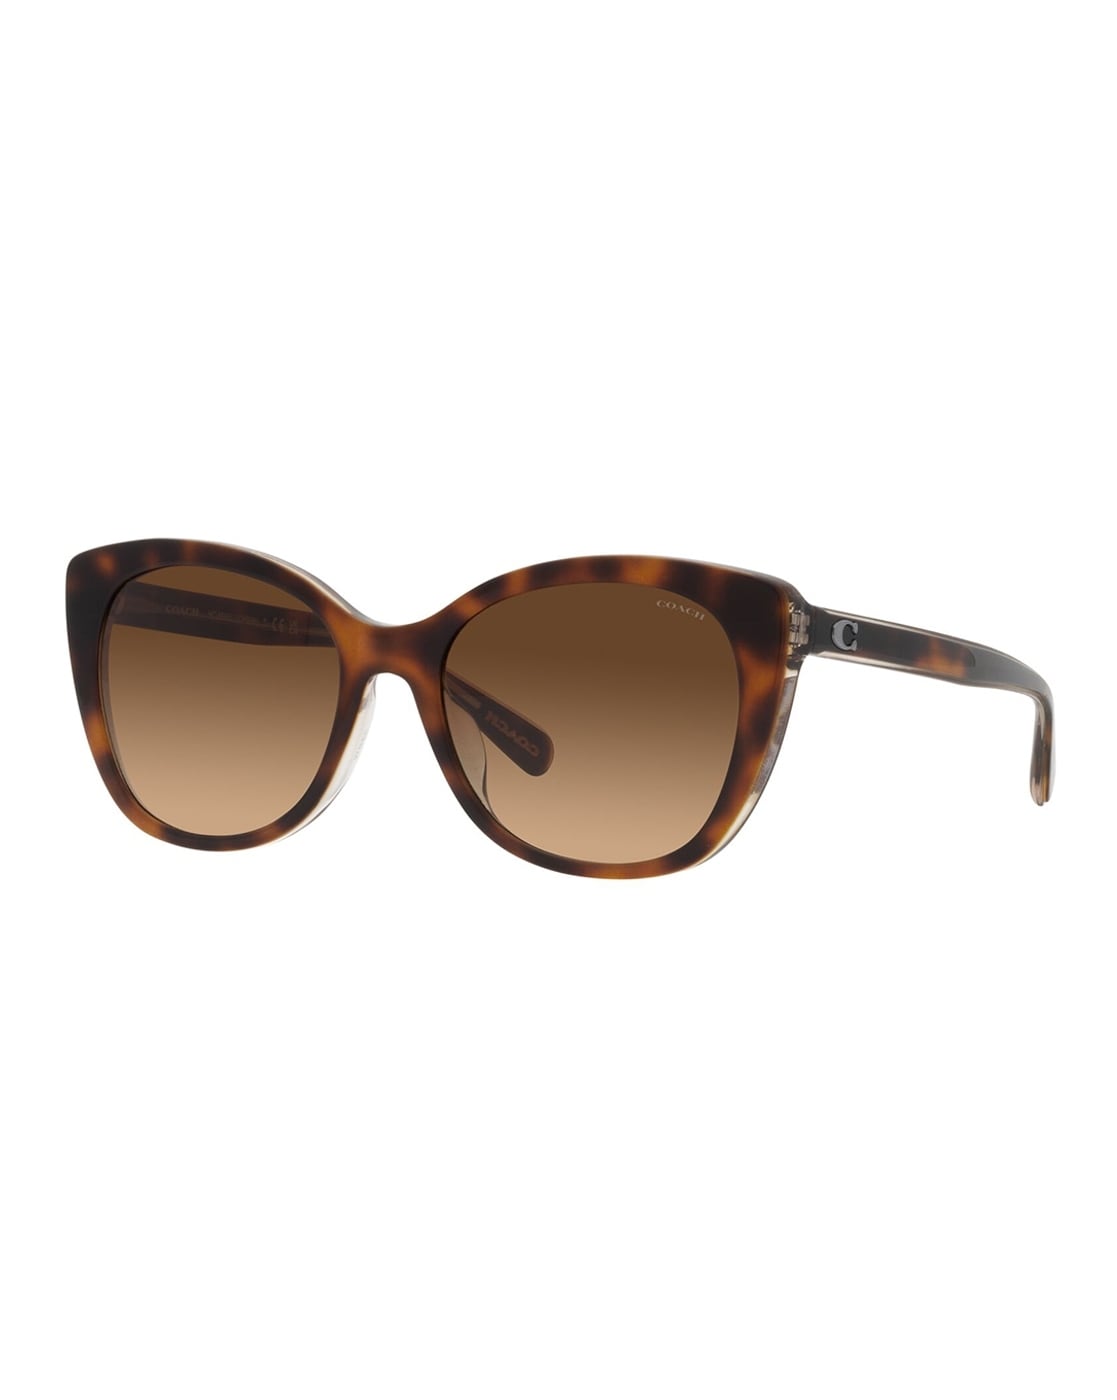 Buy Coach Women UV Protected Blue Lens Square Sunglasses - 0HC835257148054  Online